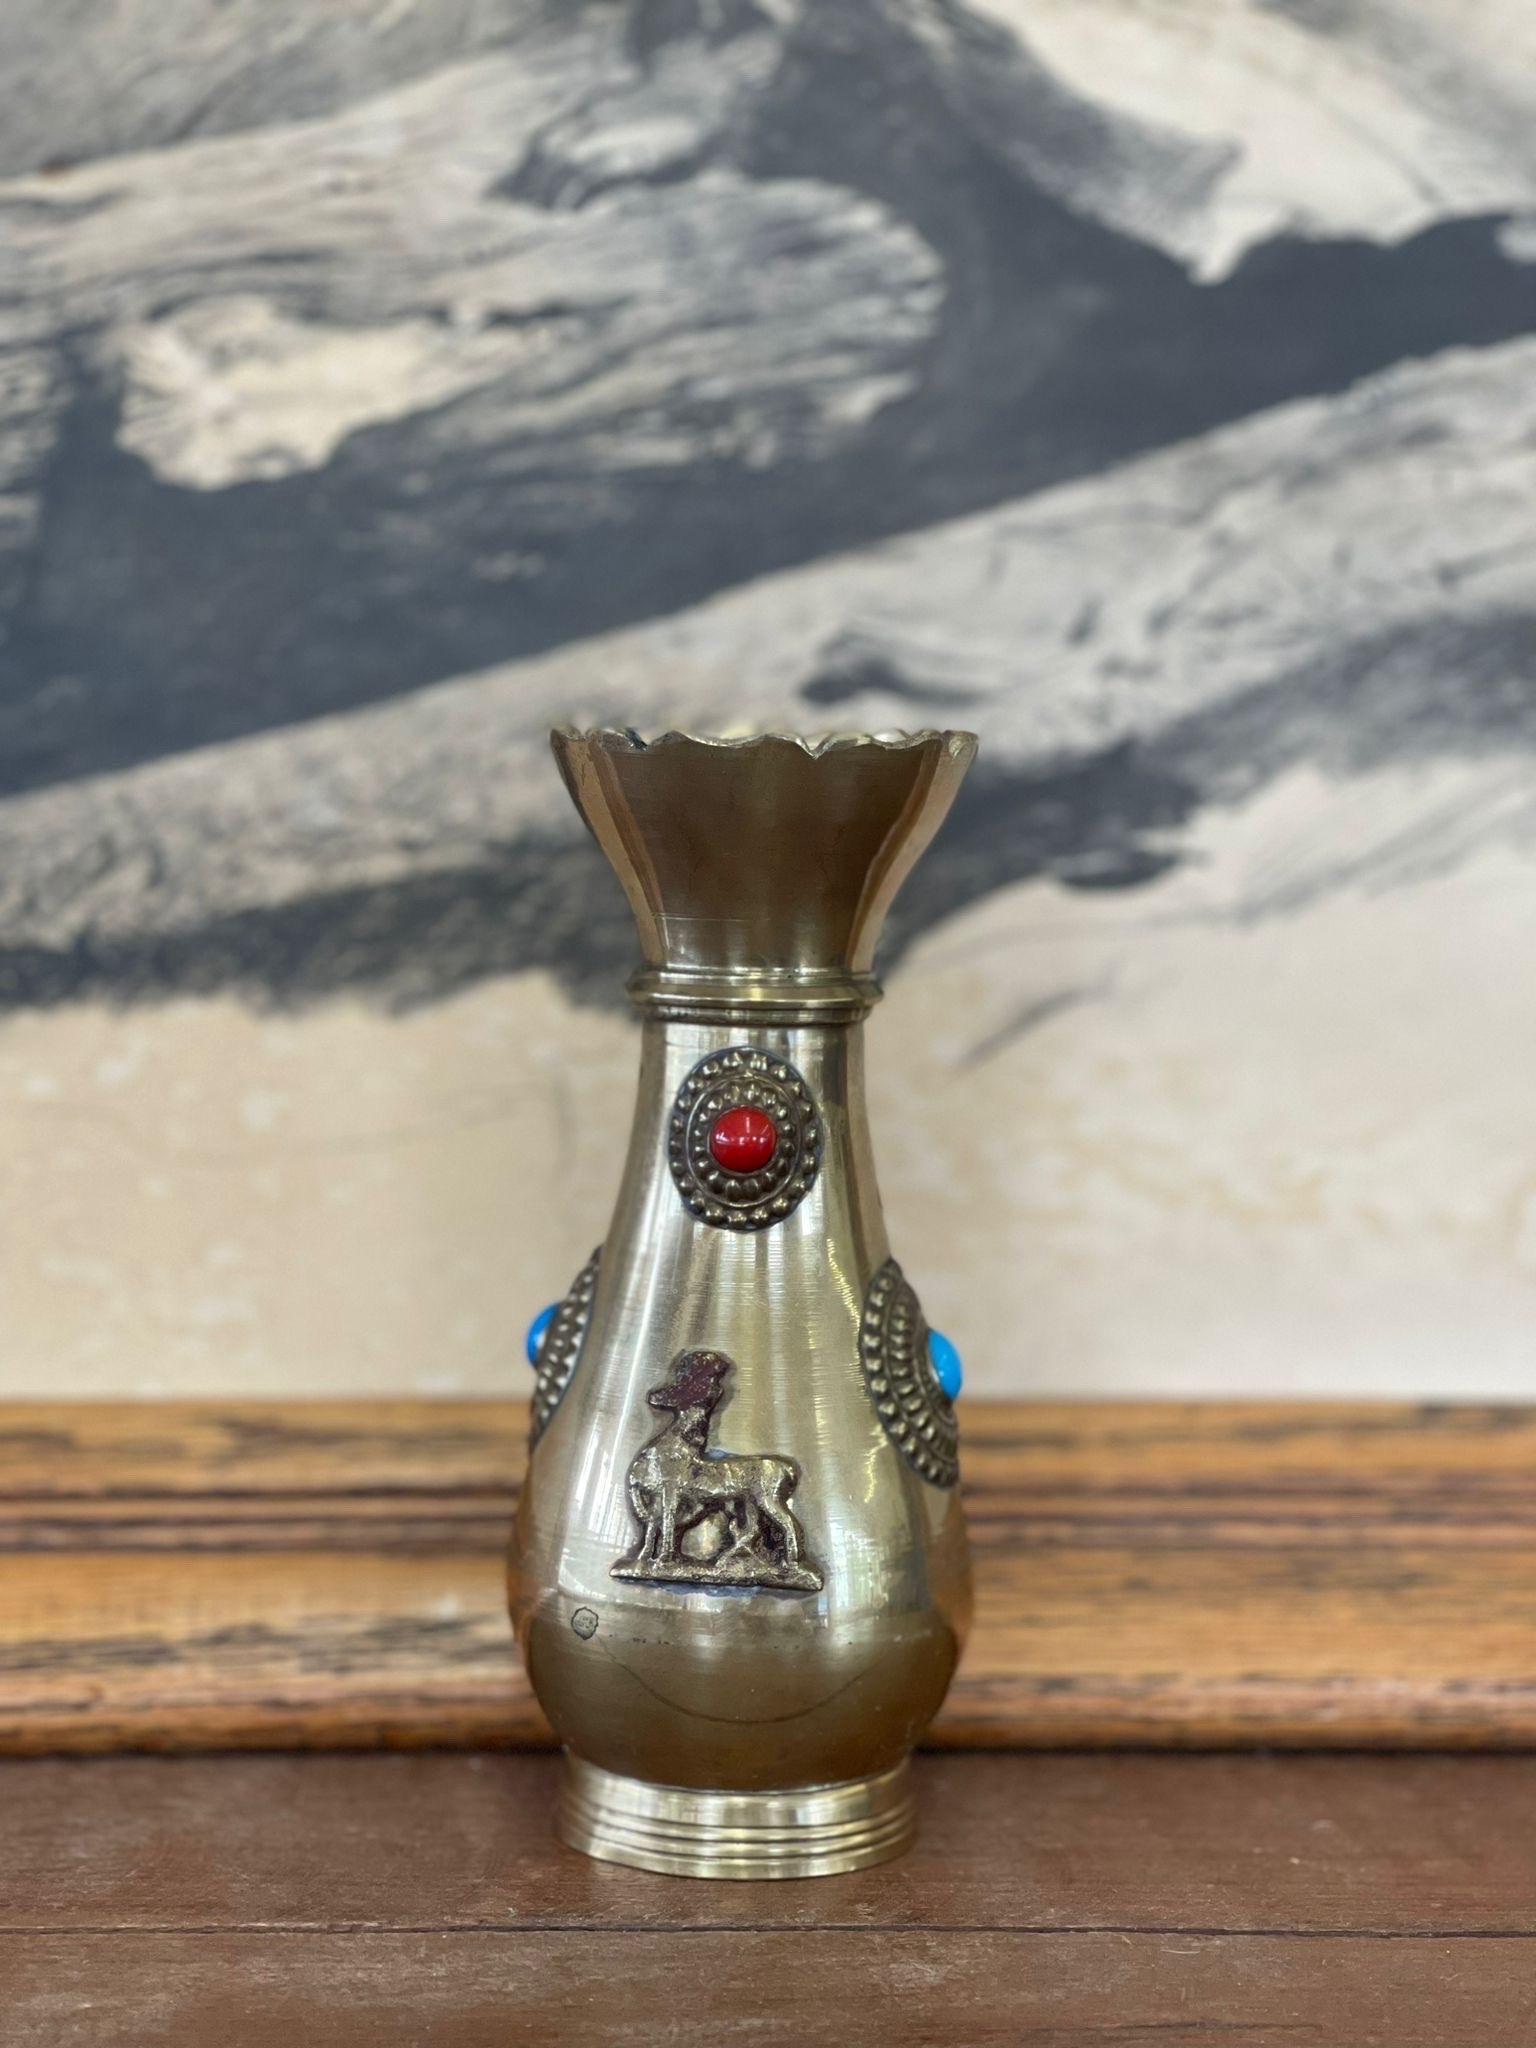 Antiqueq Decorative Brass Bejeweled Vase Red and Blue Accents Decor Art decor

Dimensions. 3 W ; 3 D ; 6 H